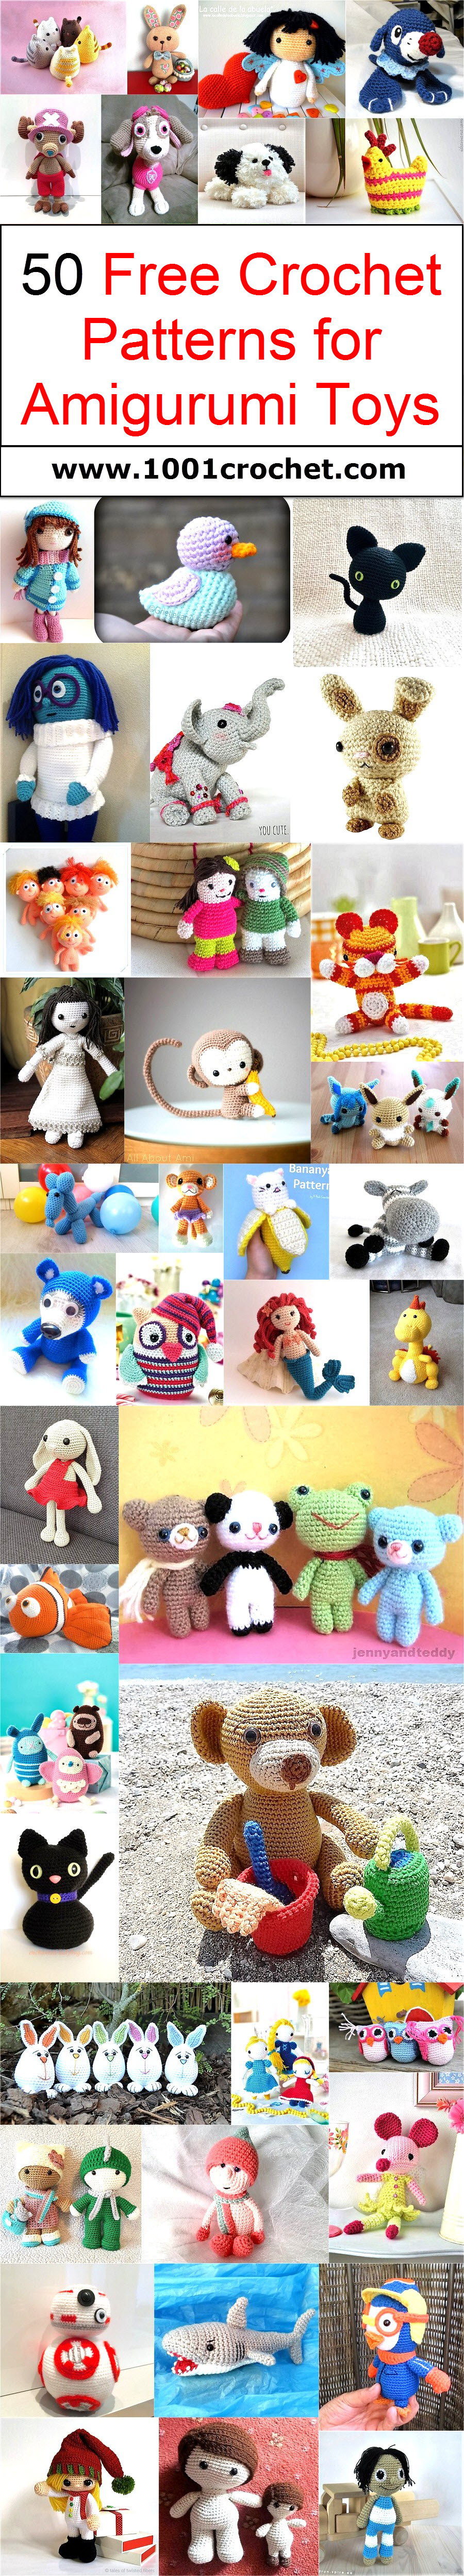 50-free-crochet-patterns-for-amigurumi-toys